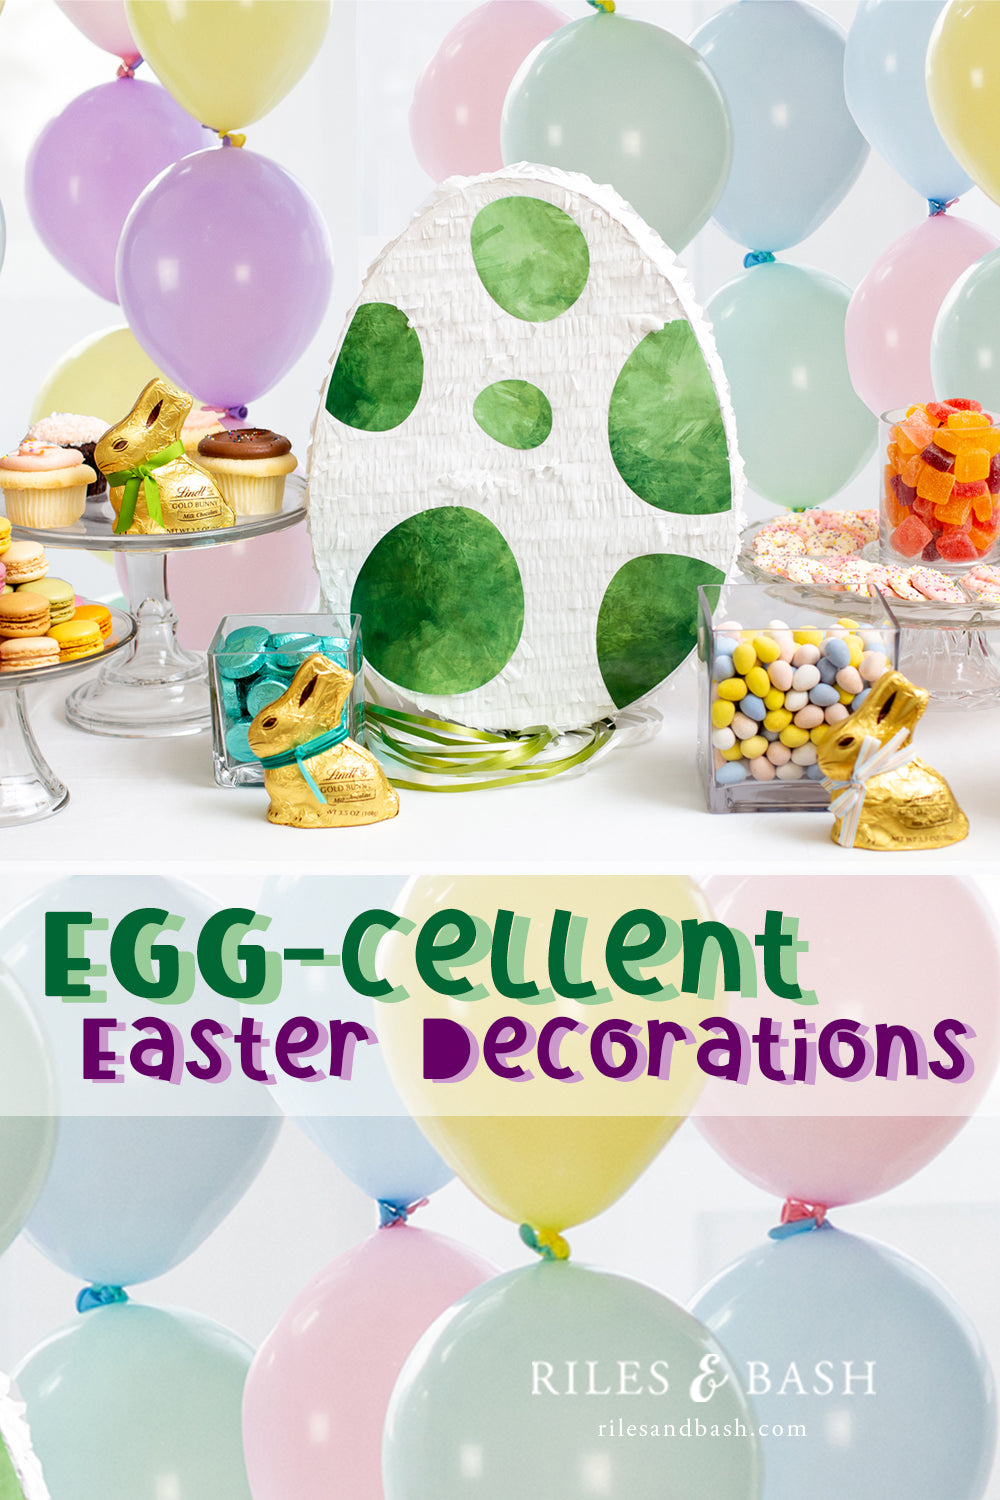 Riles & Bash_Egg-cellent Easter Decorations_Easter pinata_Easter balloons